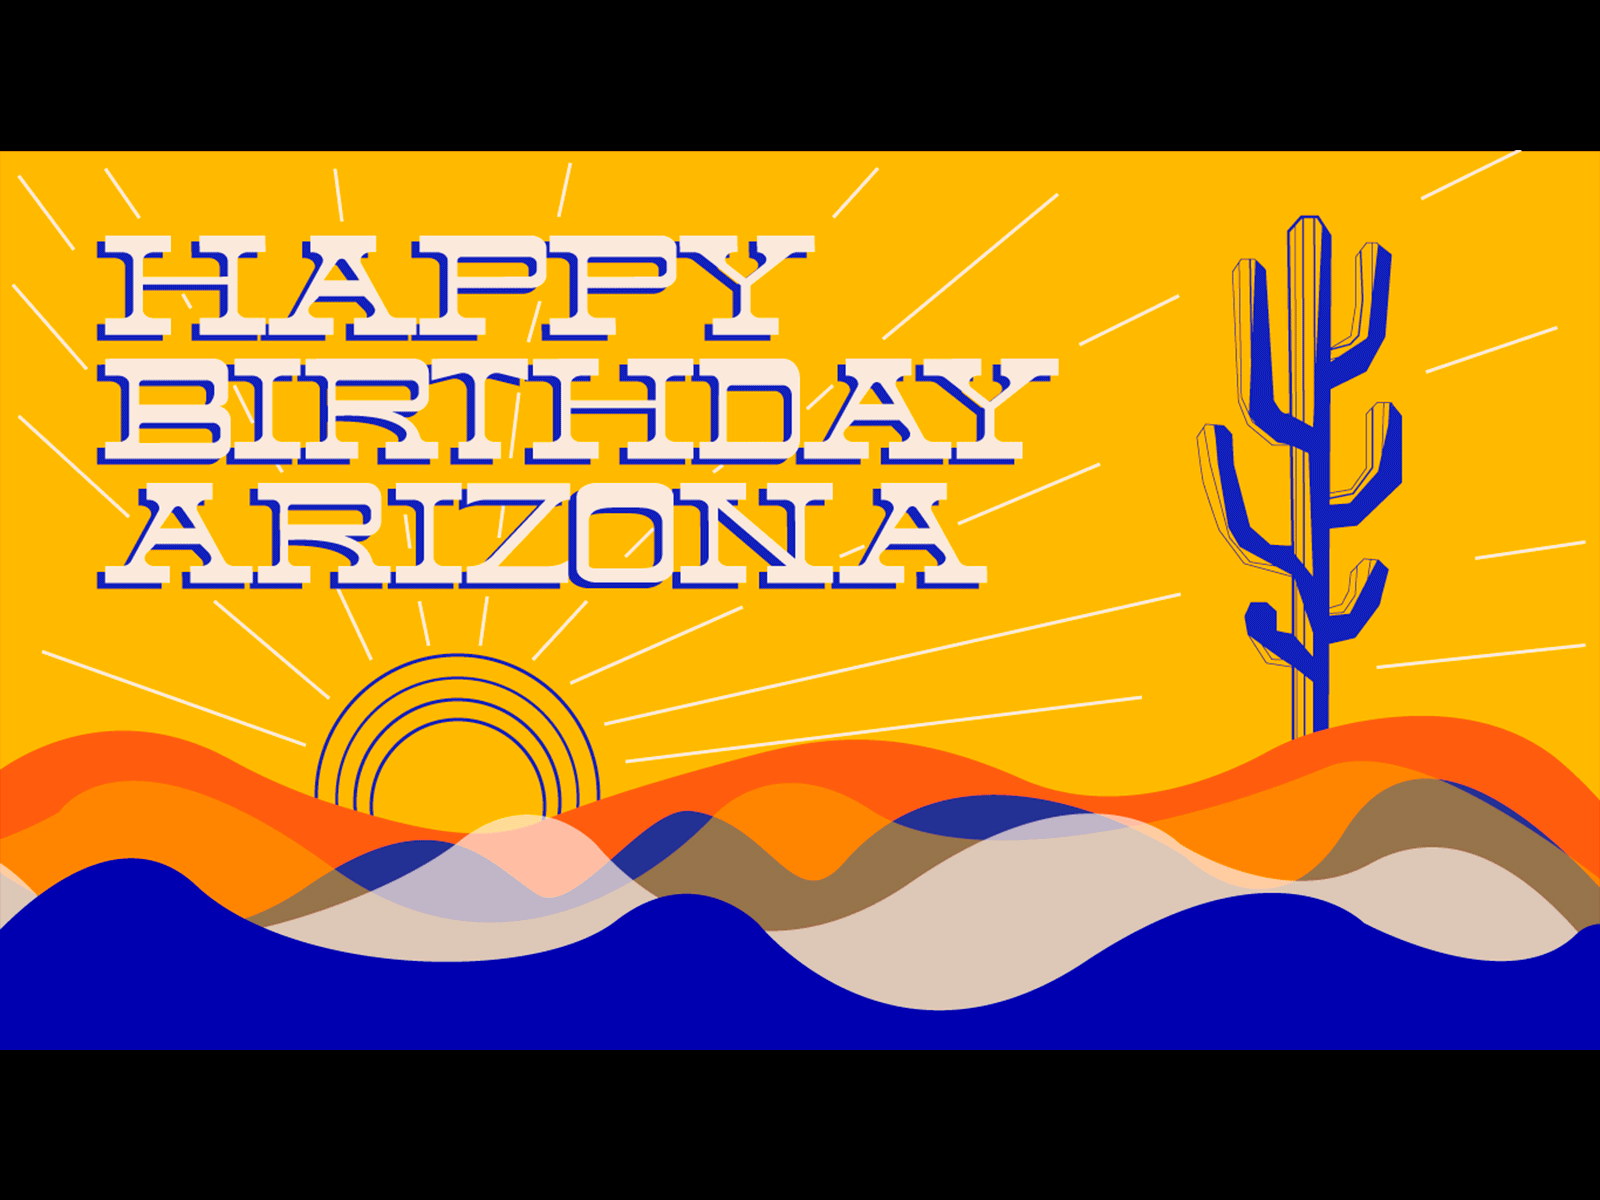 Happy Birthday AZ by Emma Chapman on Dribbble